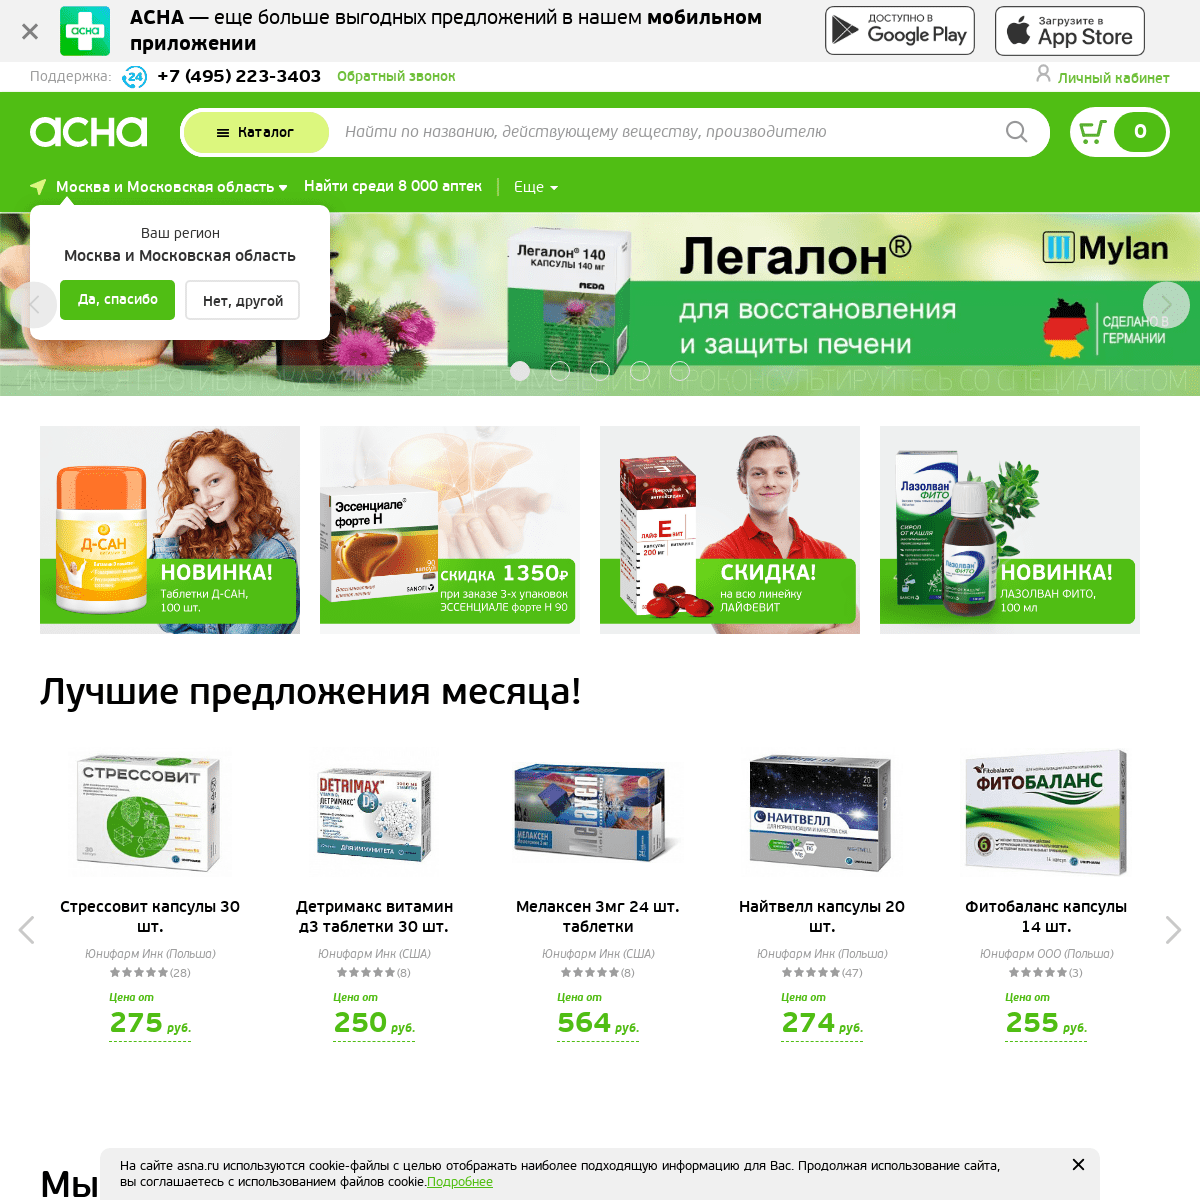 A complete backup of asna.ru